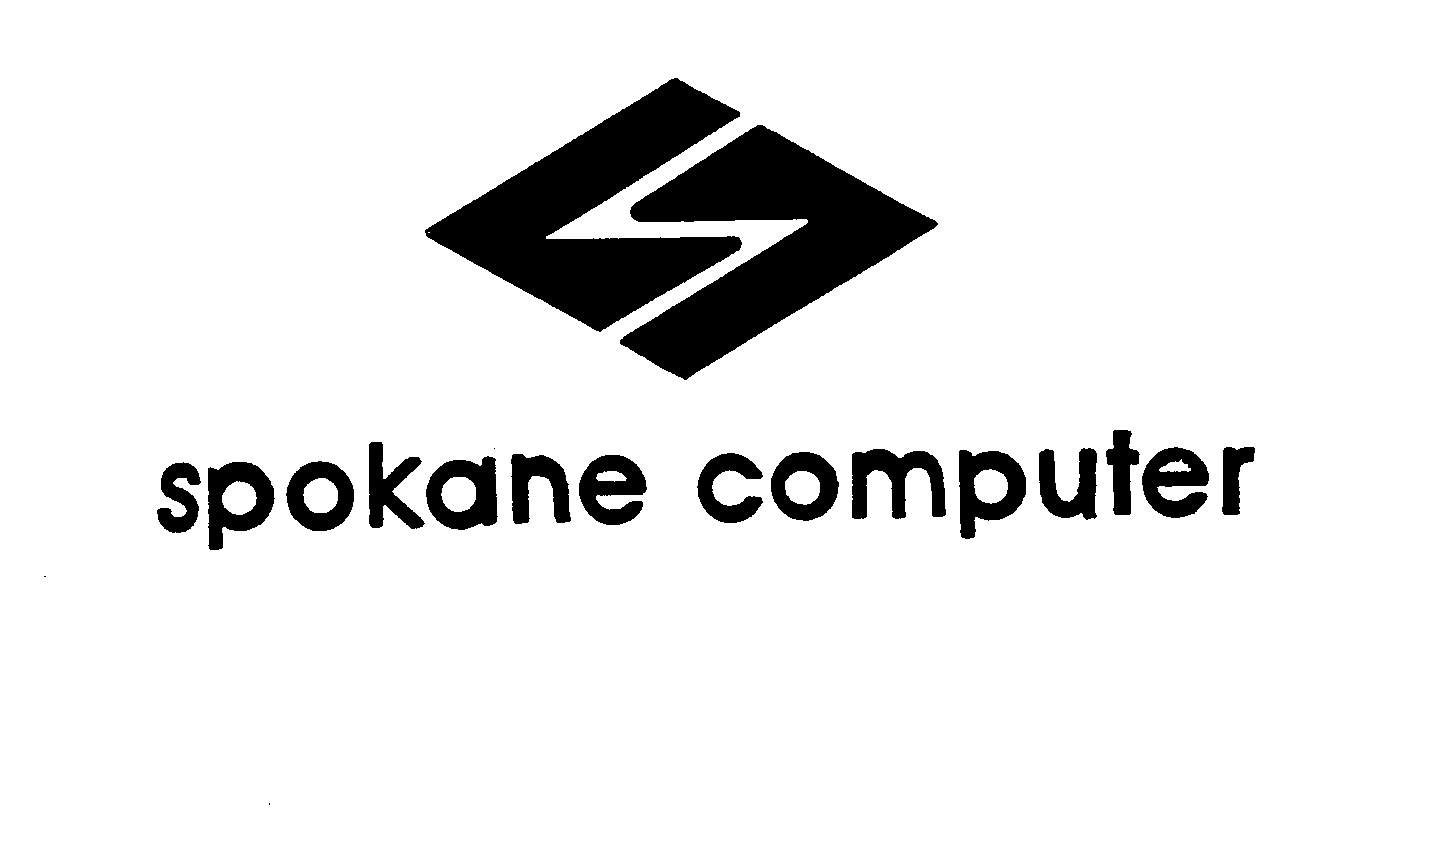  SPOKANE COMPUTER